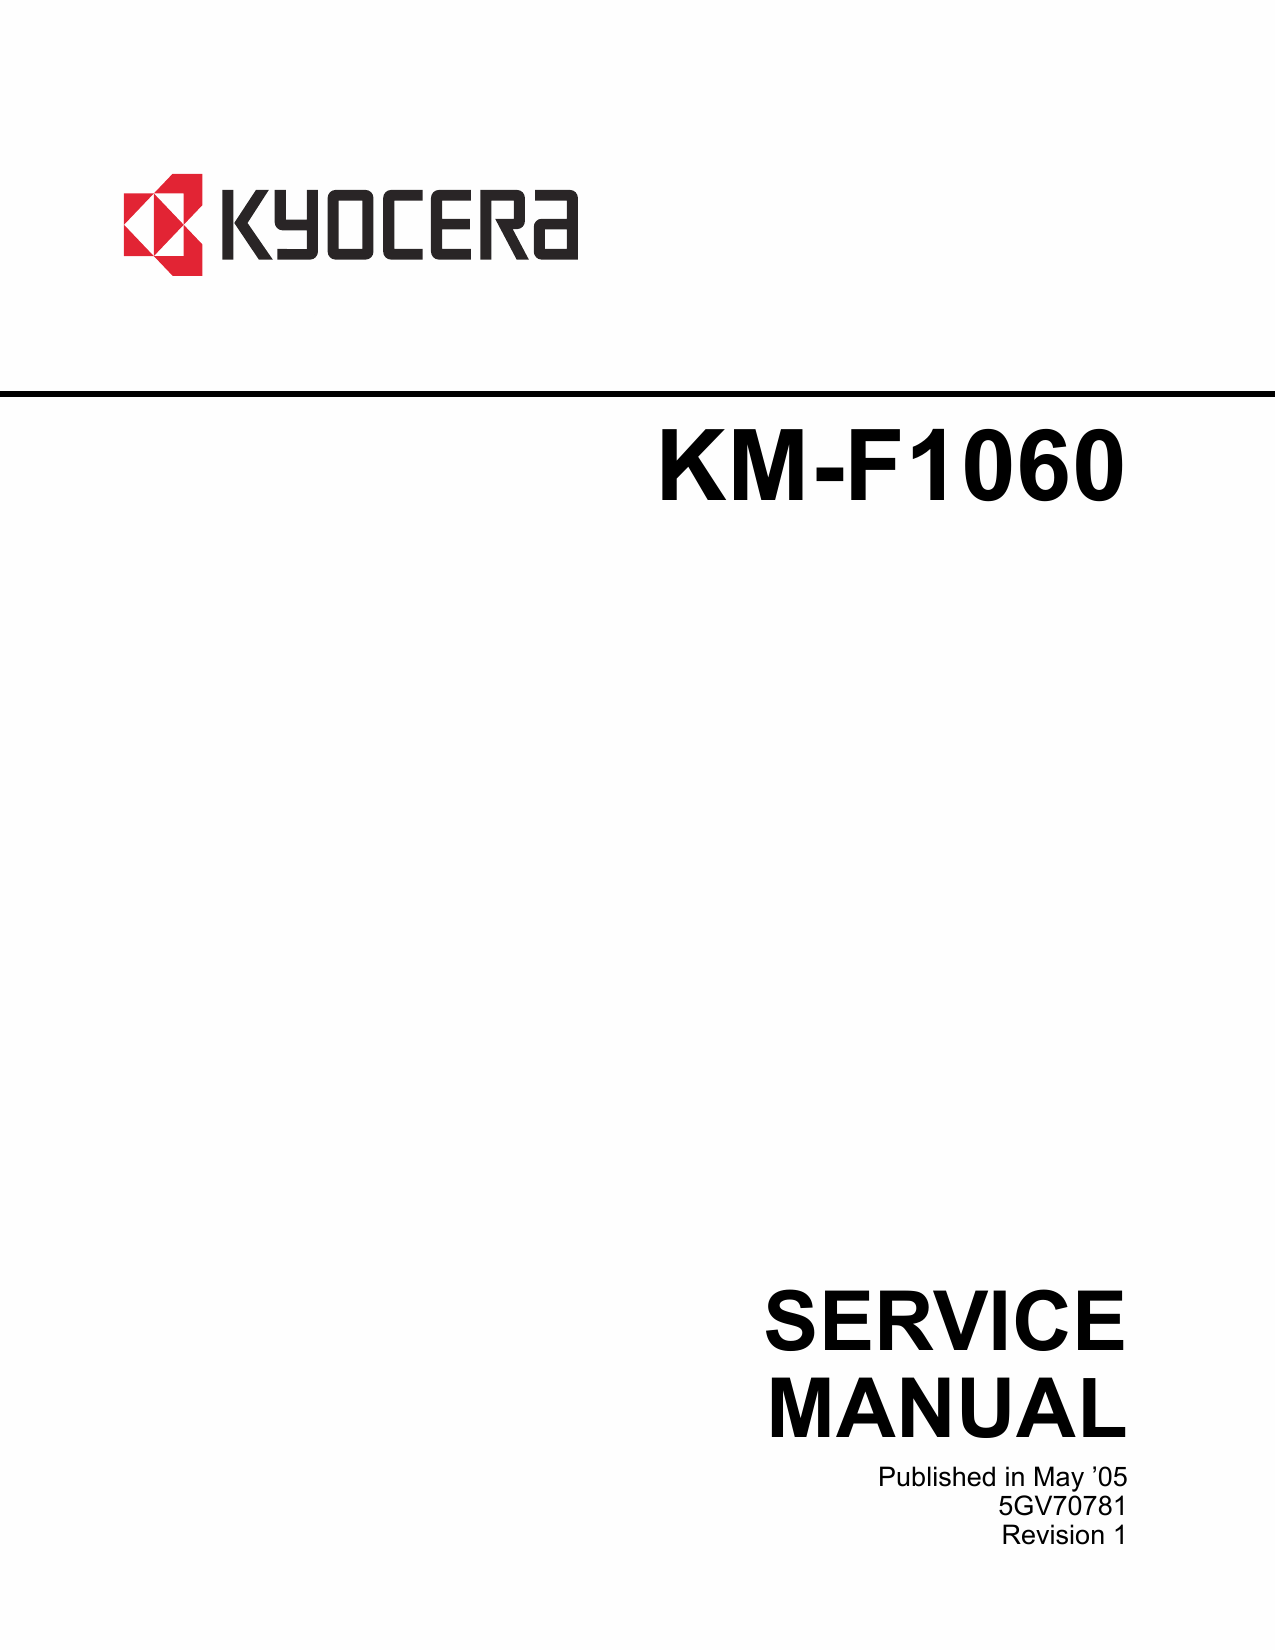 KYOCERA MFP KM-F1060 Parts and Service Manual-1